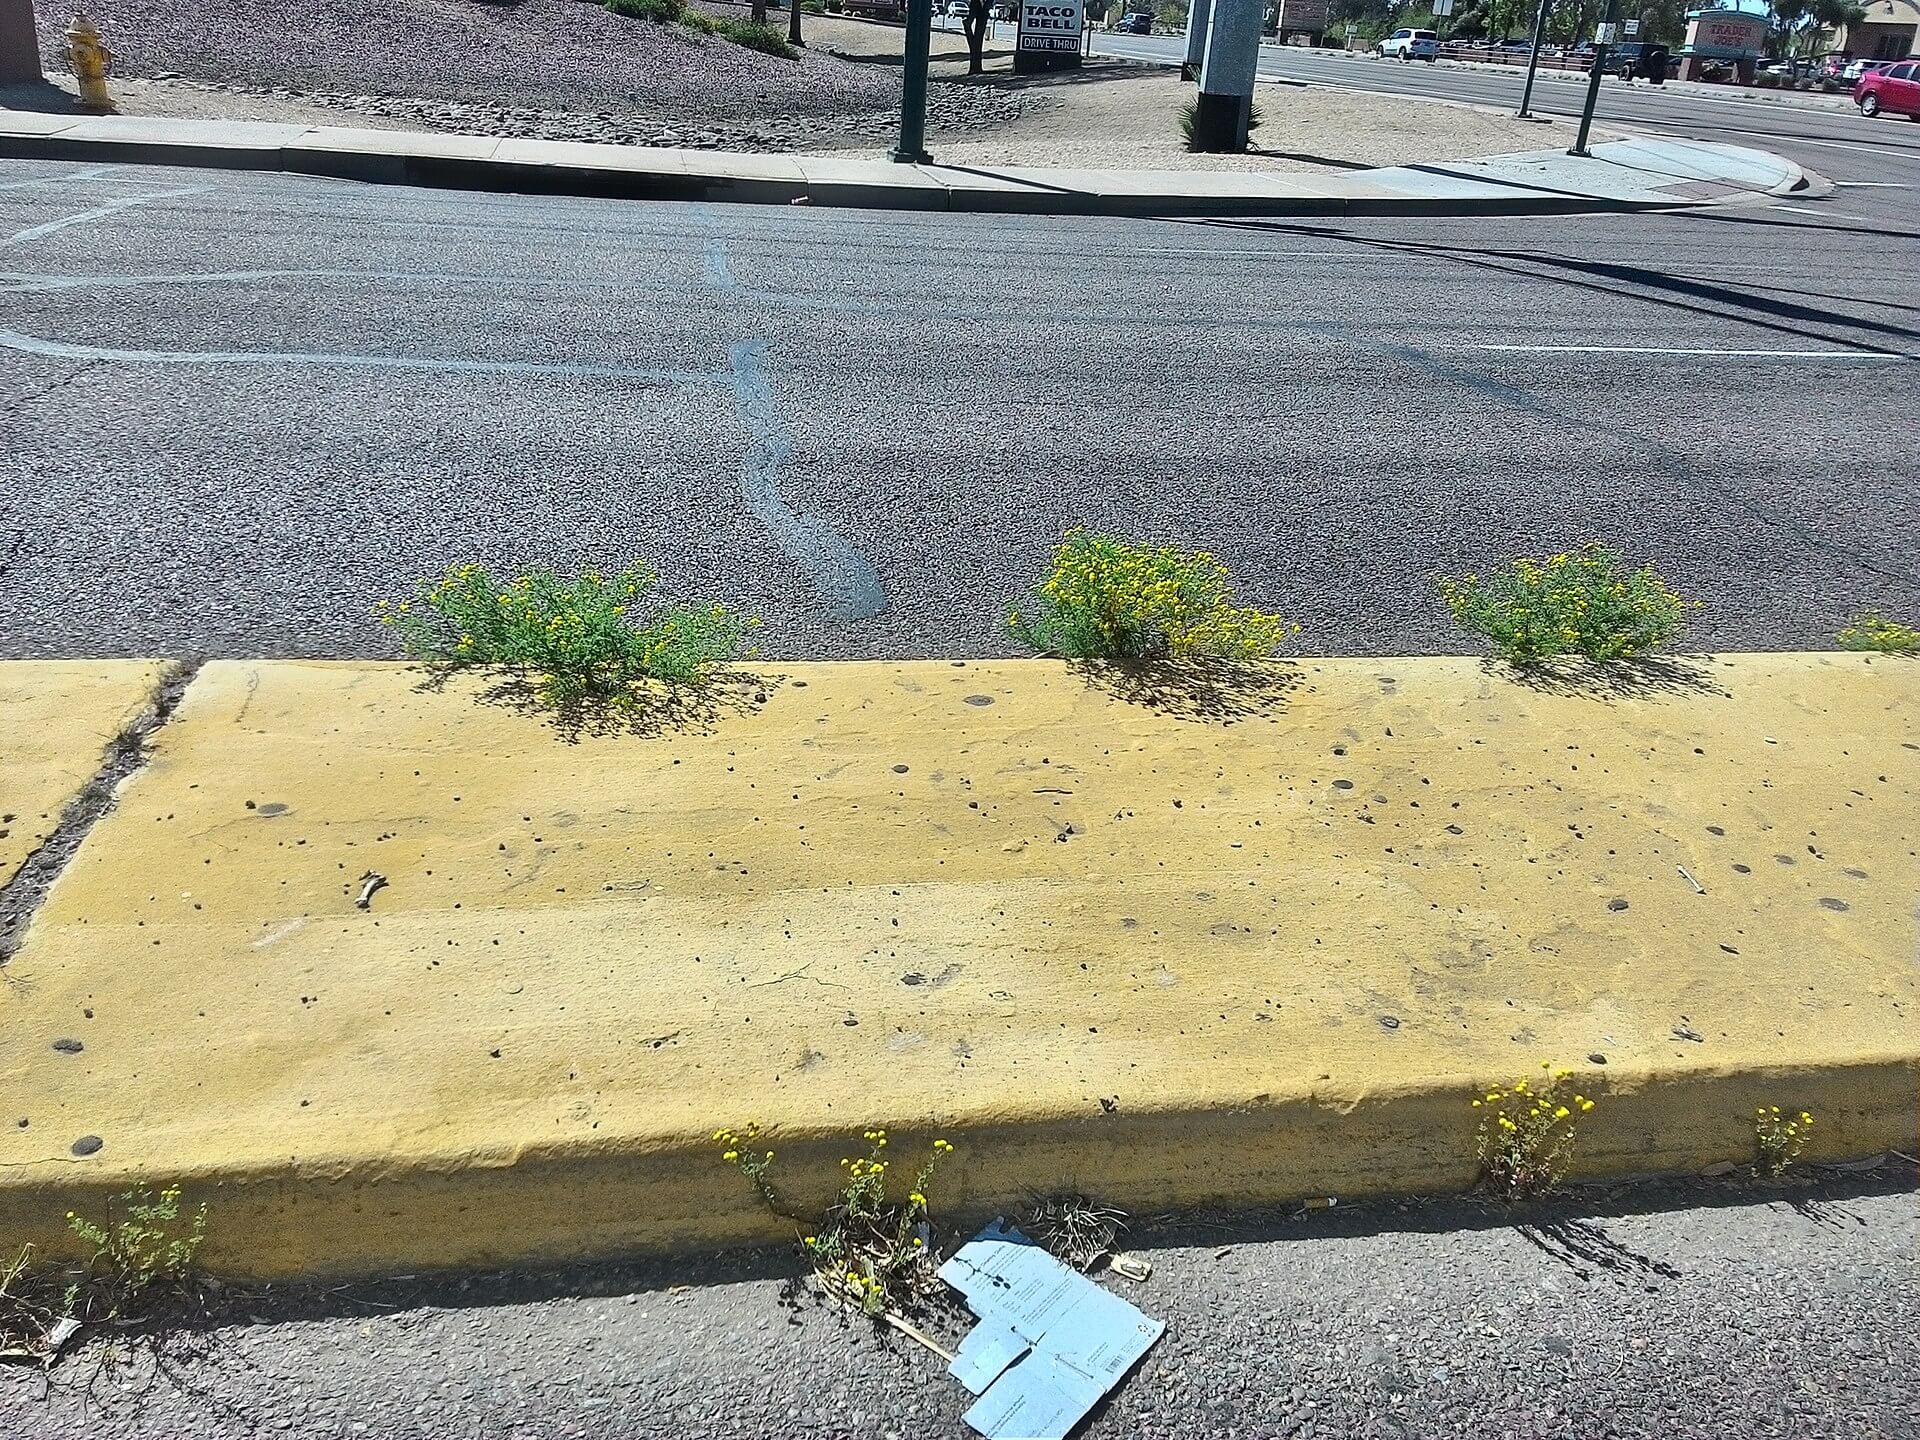 Stinknet in the streets of Arizona.